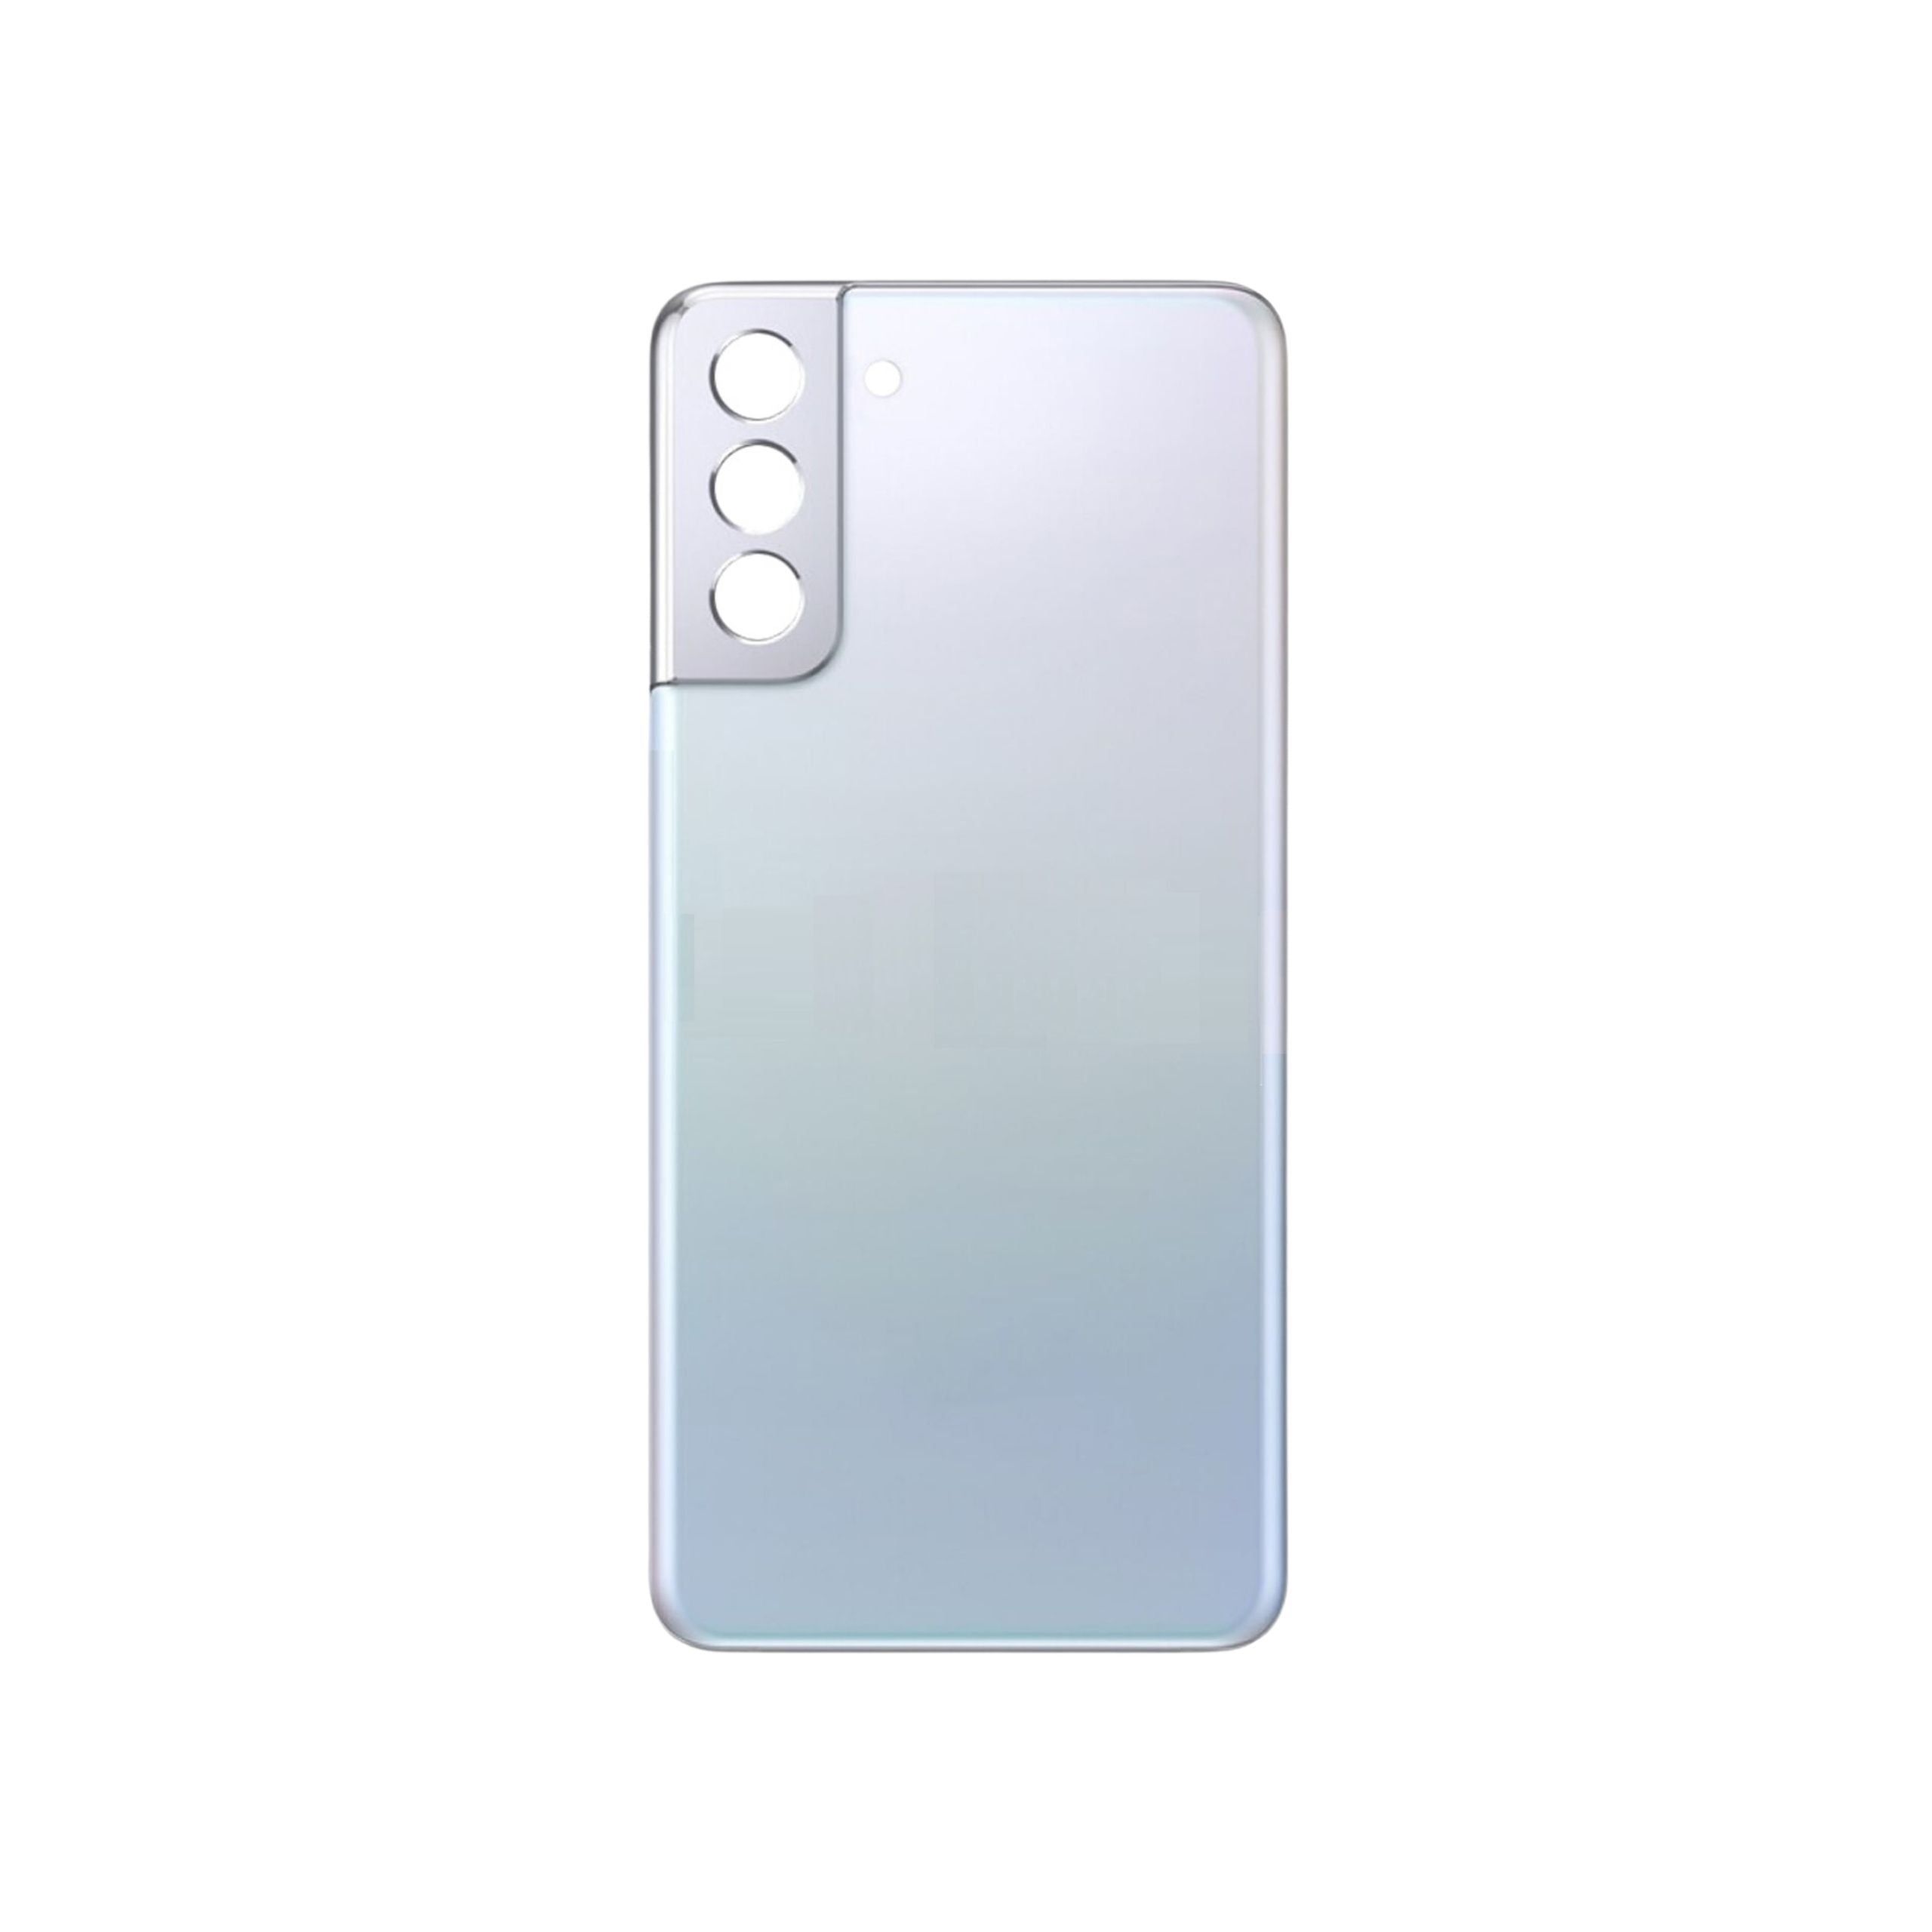 Back Door with Camera Lens for Samsung Galaxy S21 Plus 5G Phantom Silver